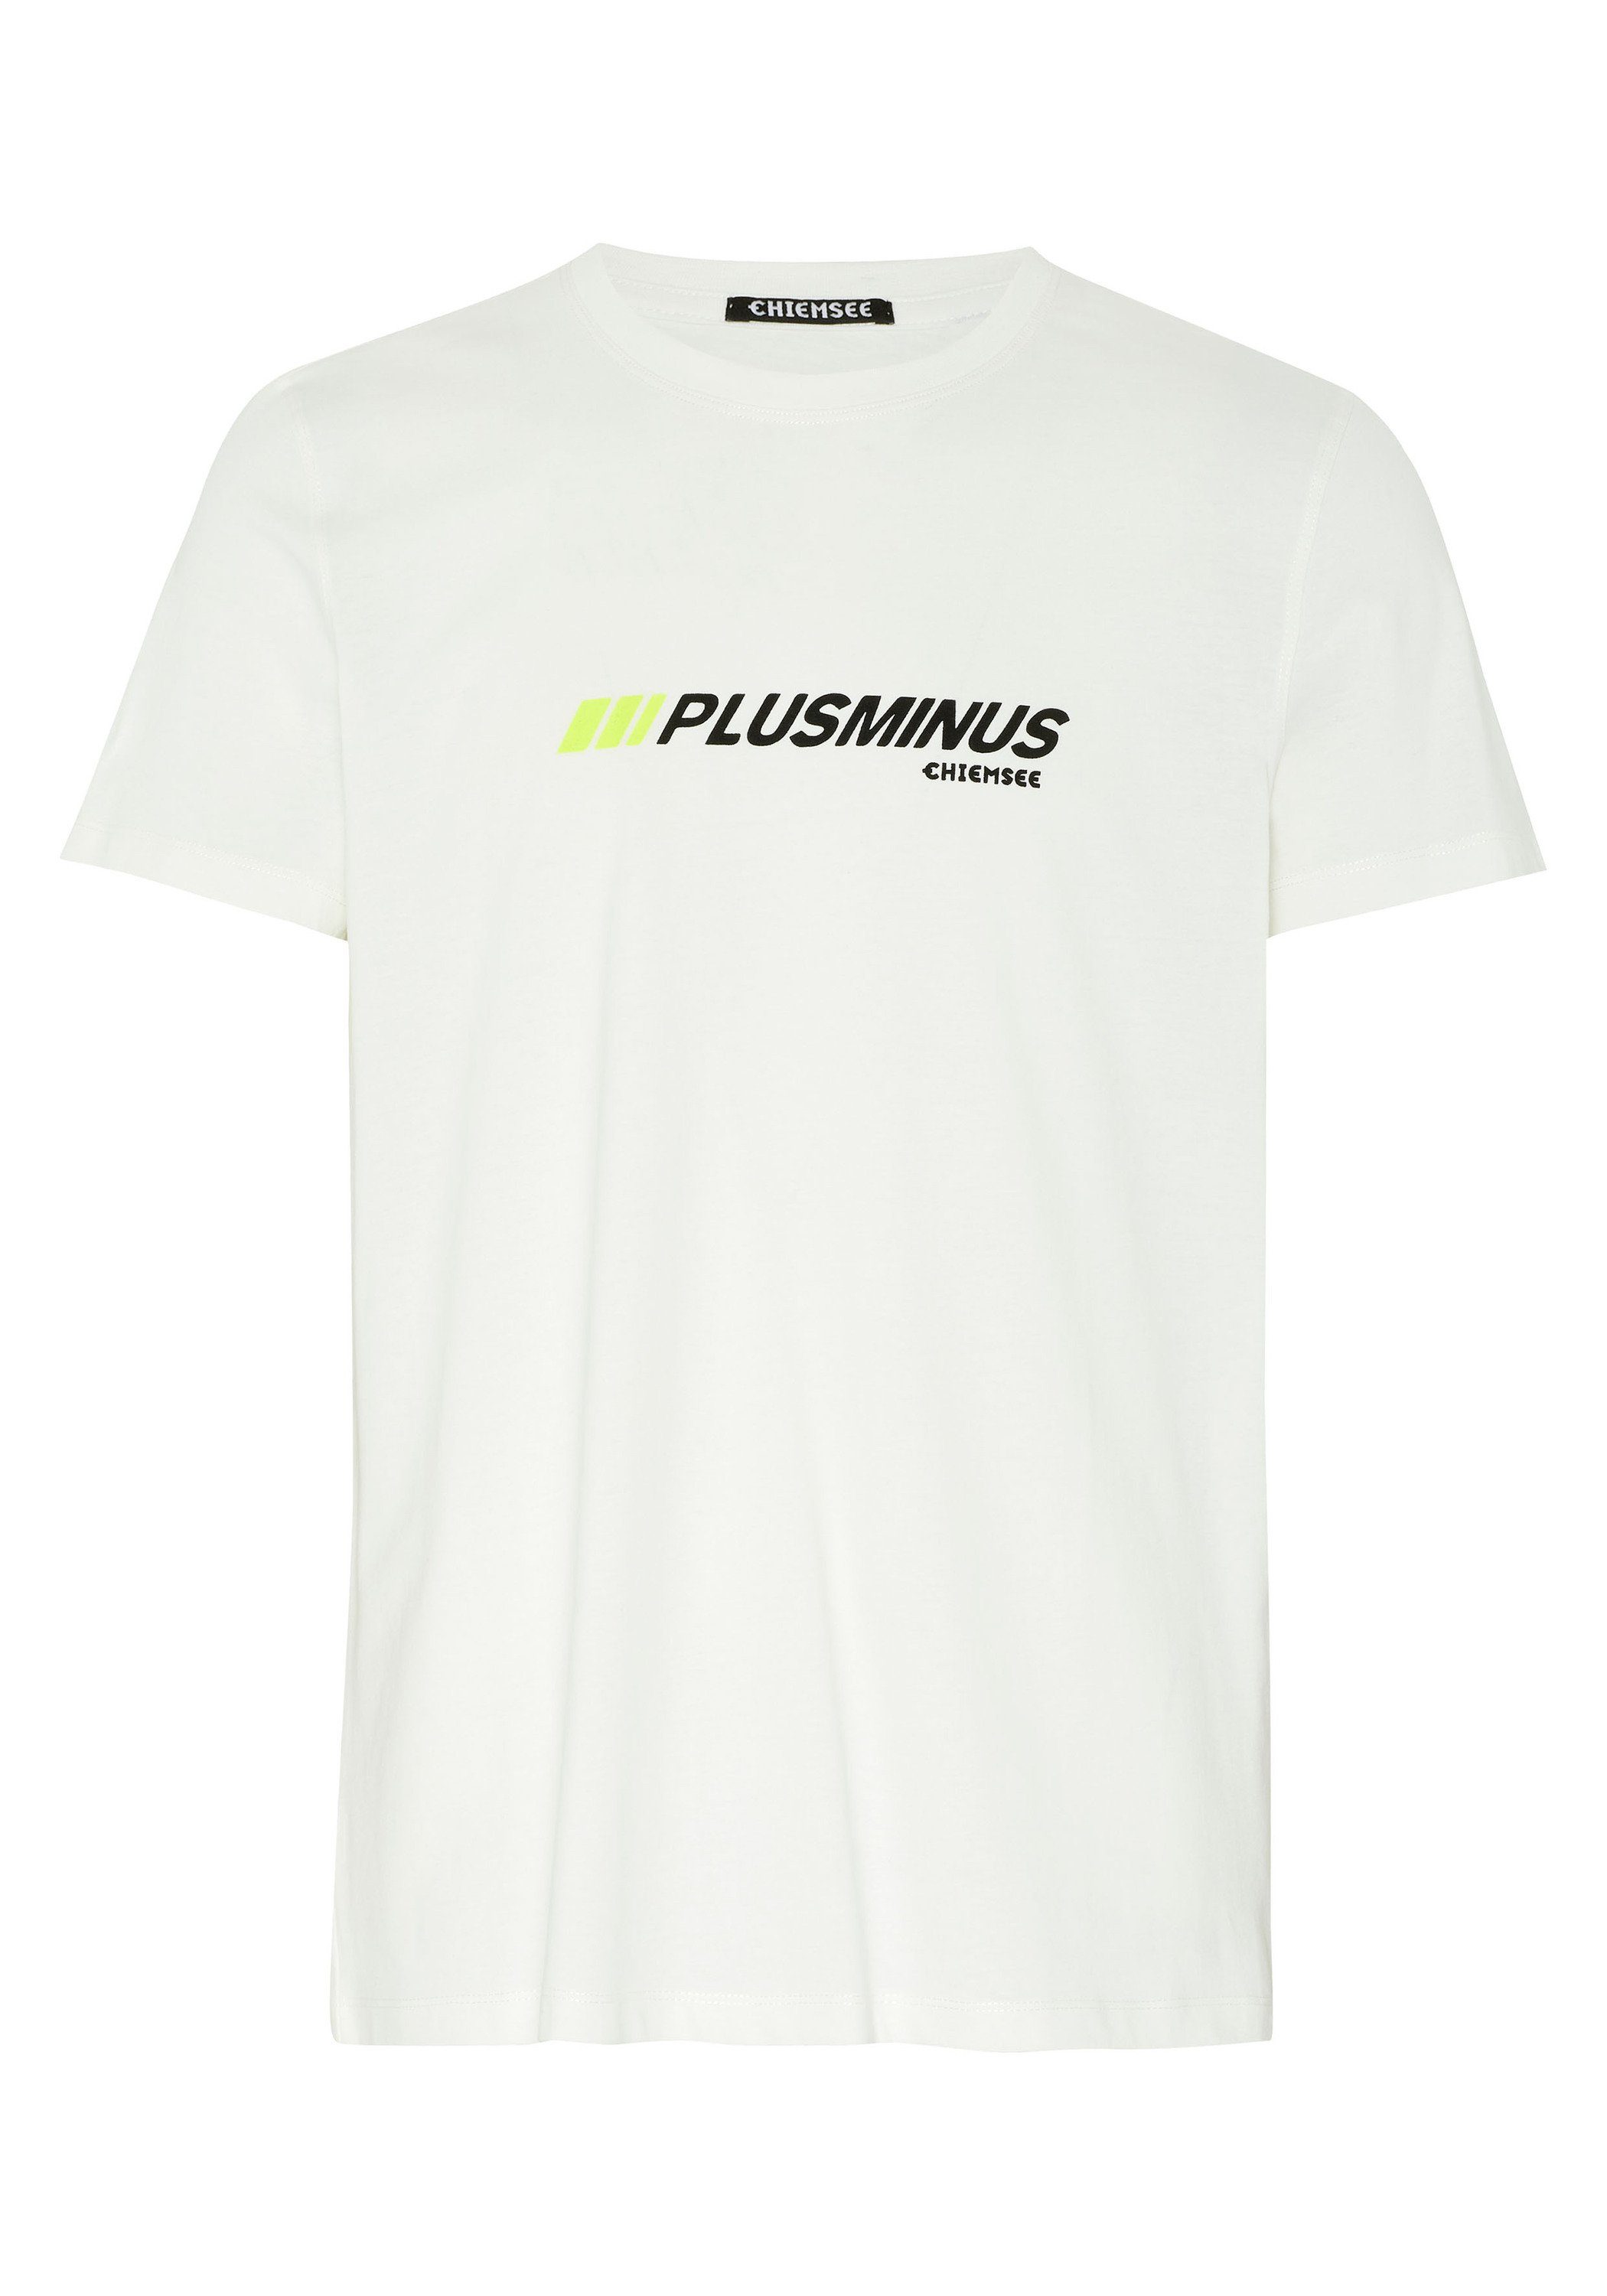 Chiemsee Print-Shirt T-Shirt mit PLUS-MINUS-Print 1 Star White